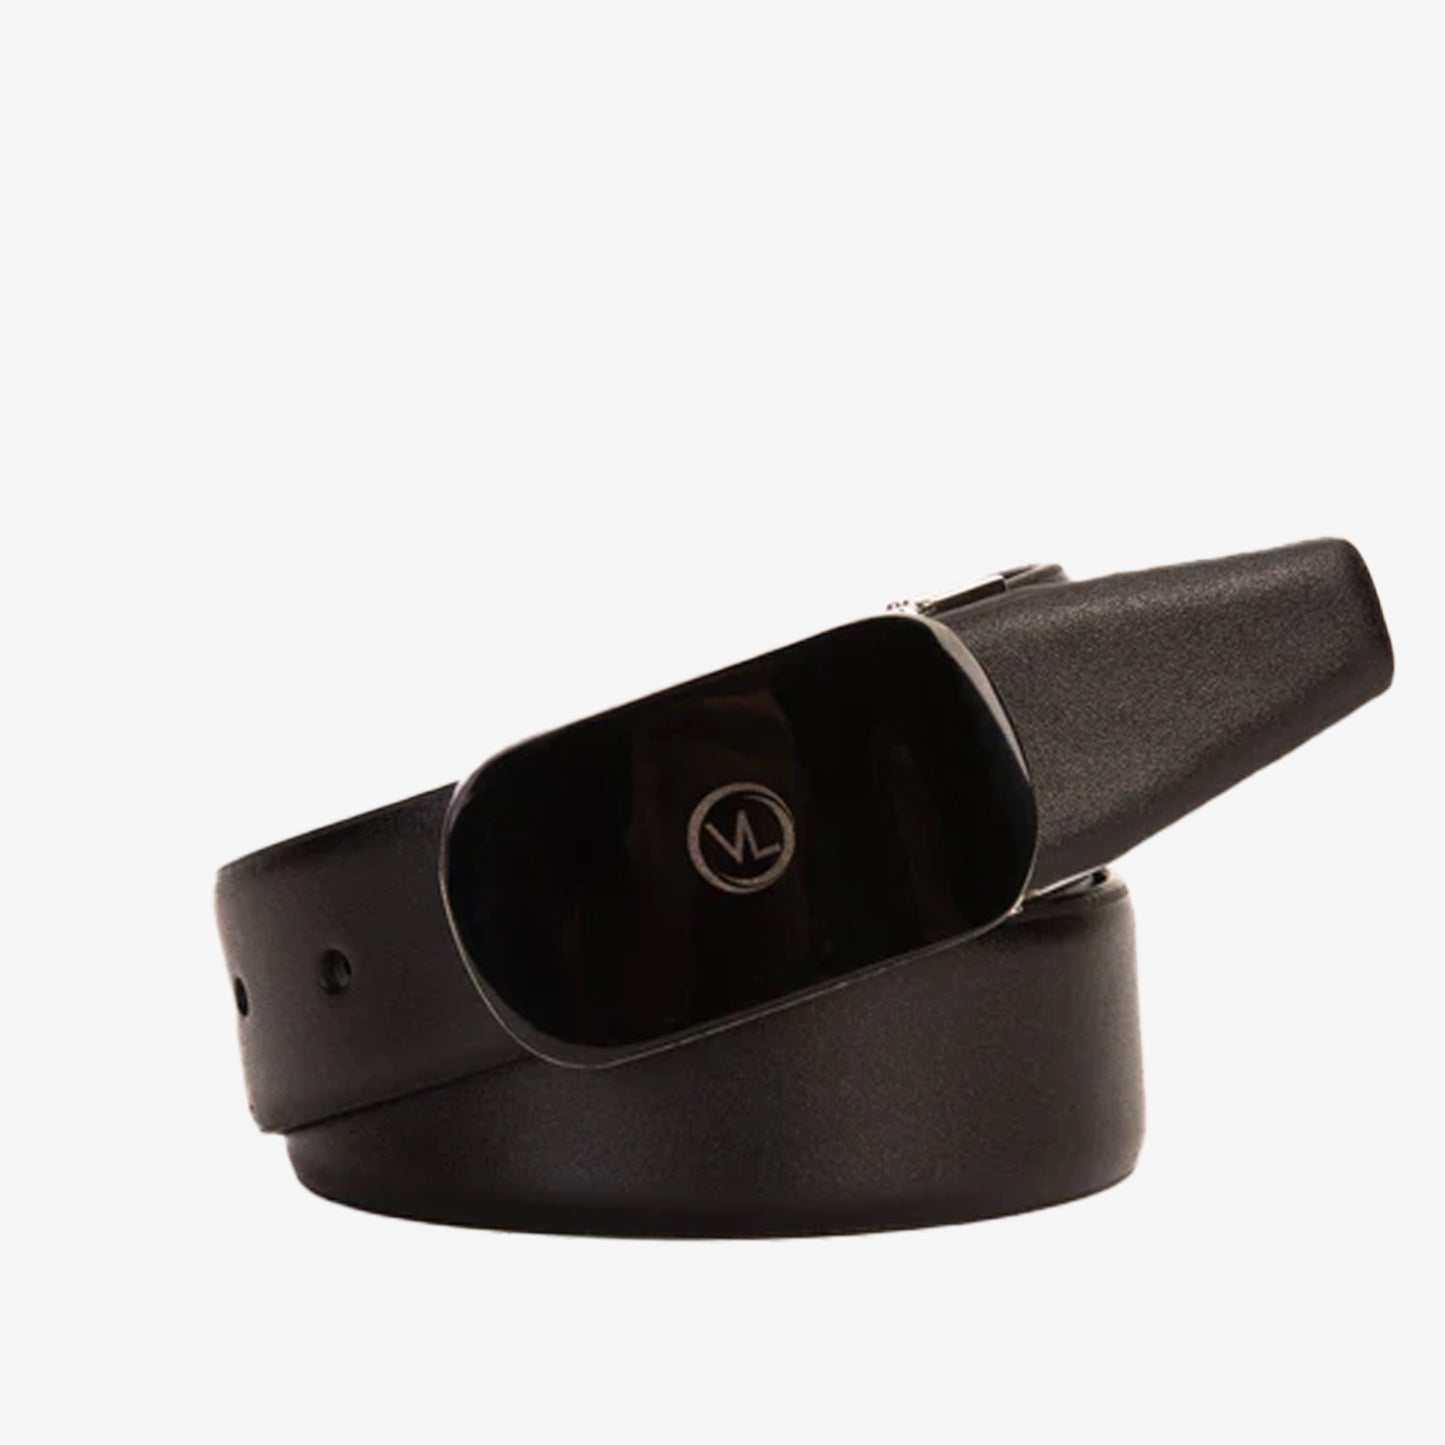 The Marzano Black Color Calfskin  Belt